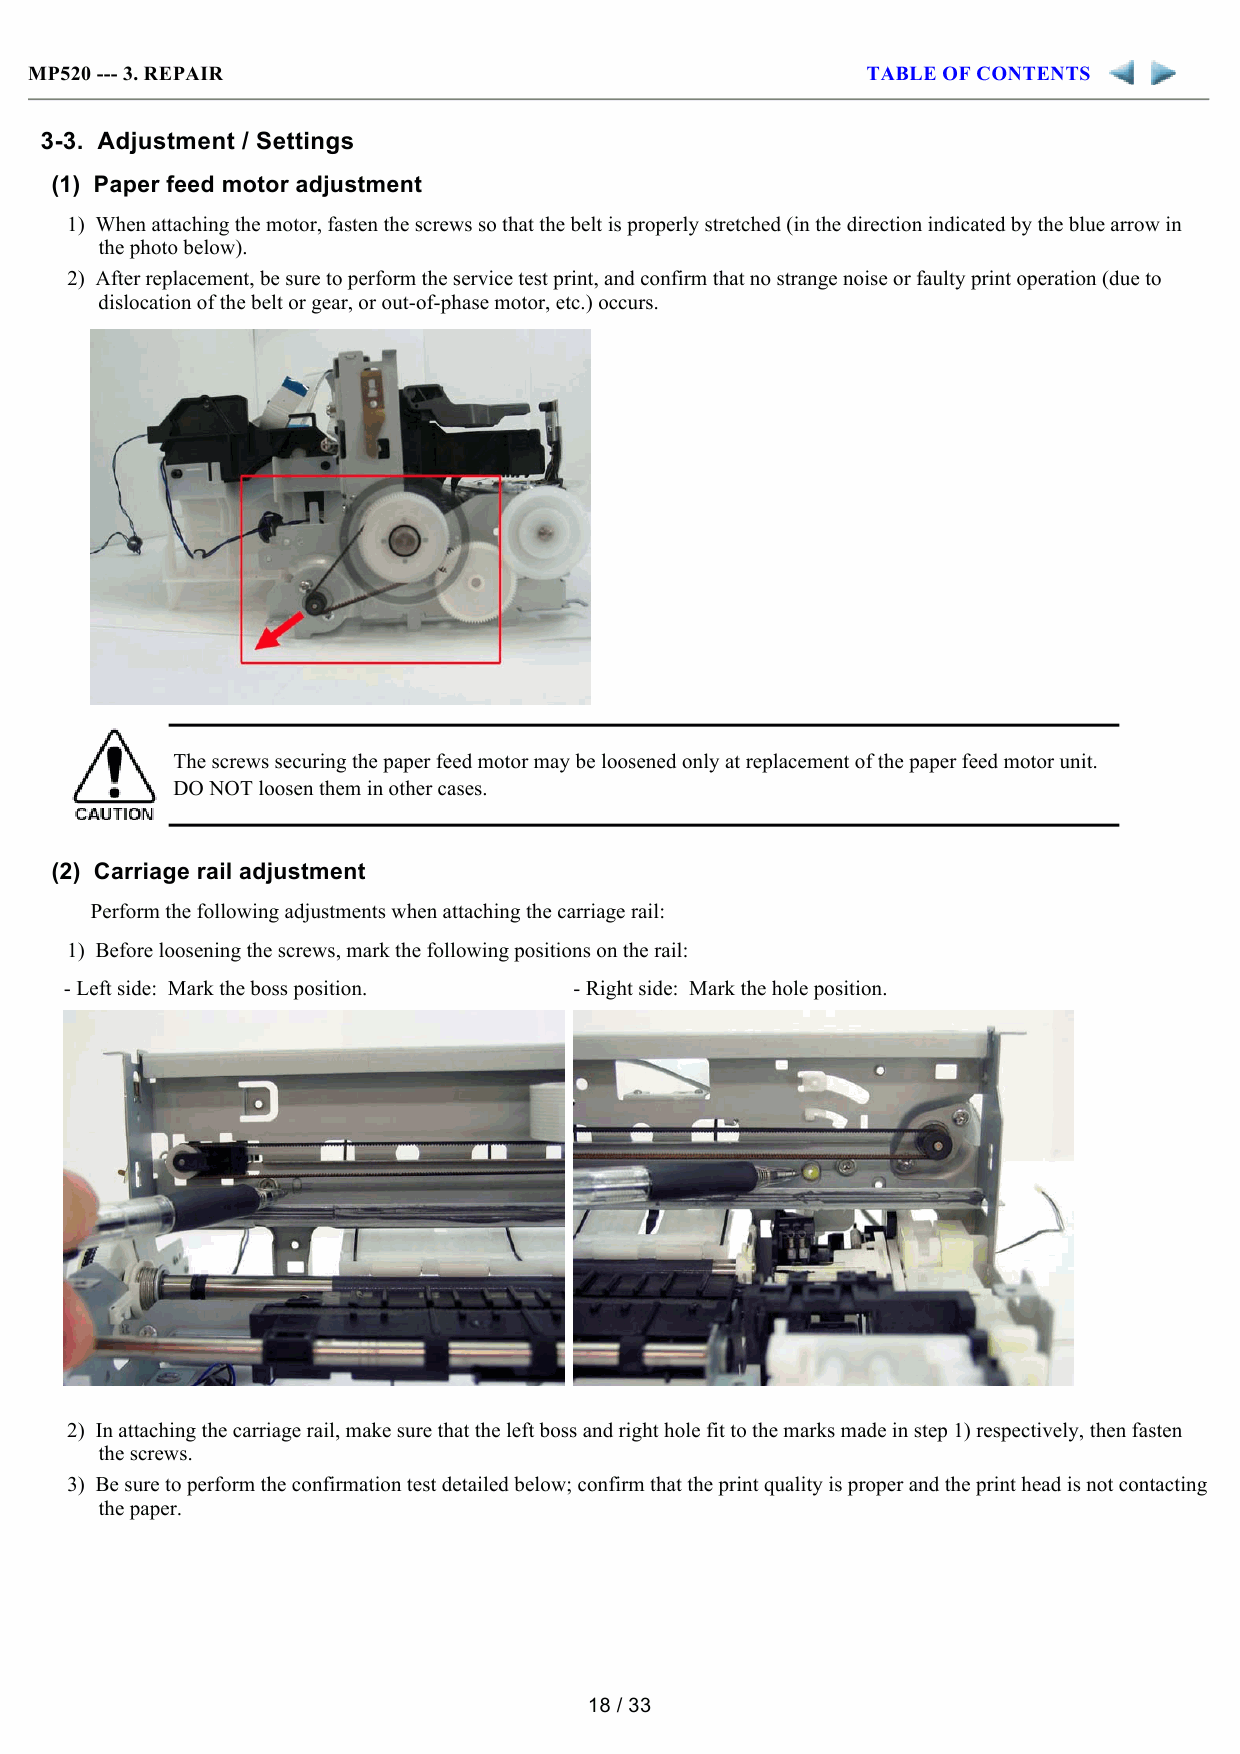 Canon PIXMA MP520 Parts and Service Manual-3